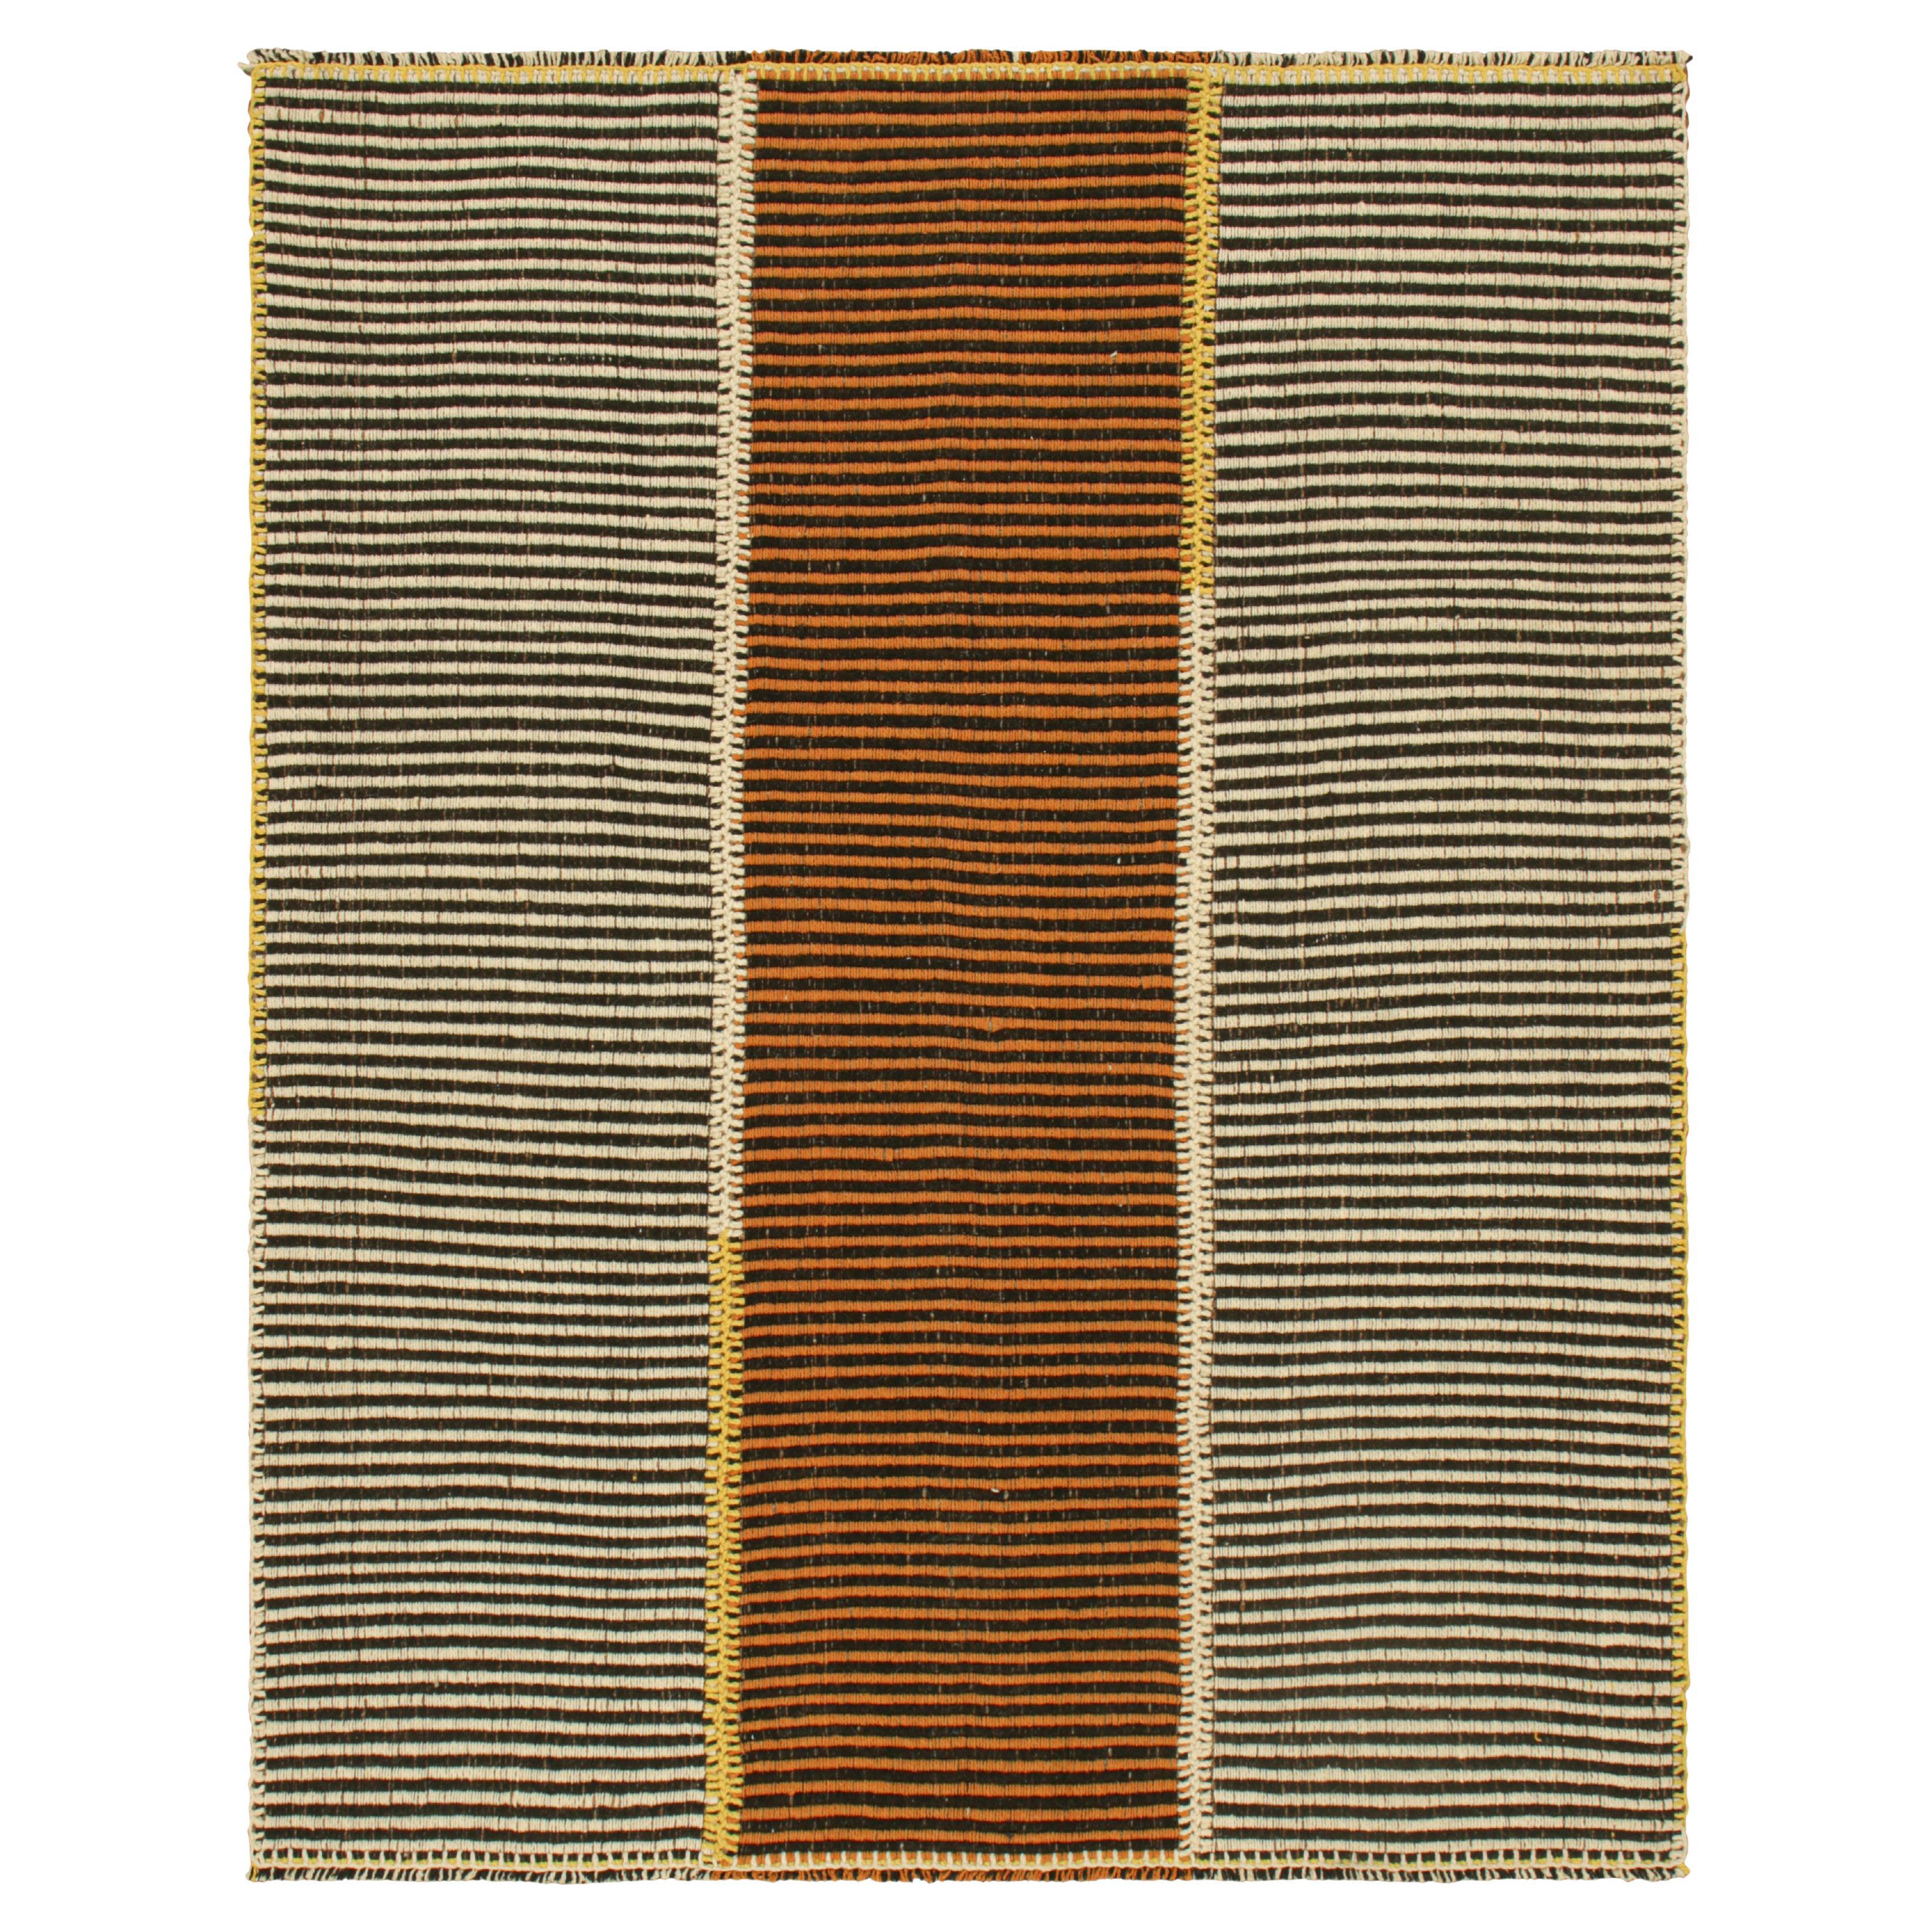 Rug & Kilim’s Contemporary Kilim in Beige-Brown and Orange Textural Stripes